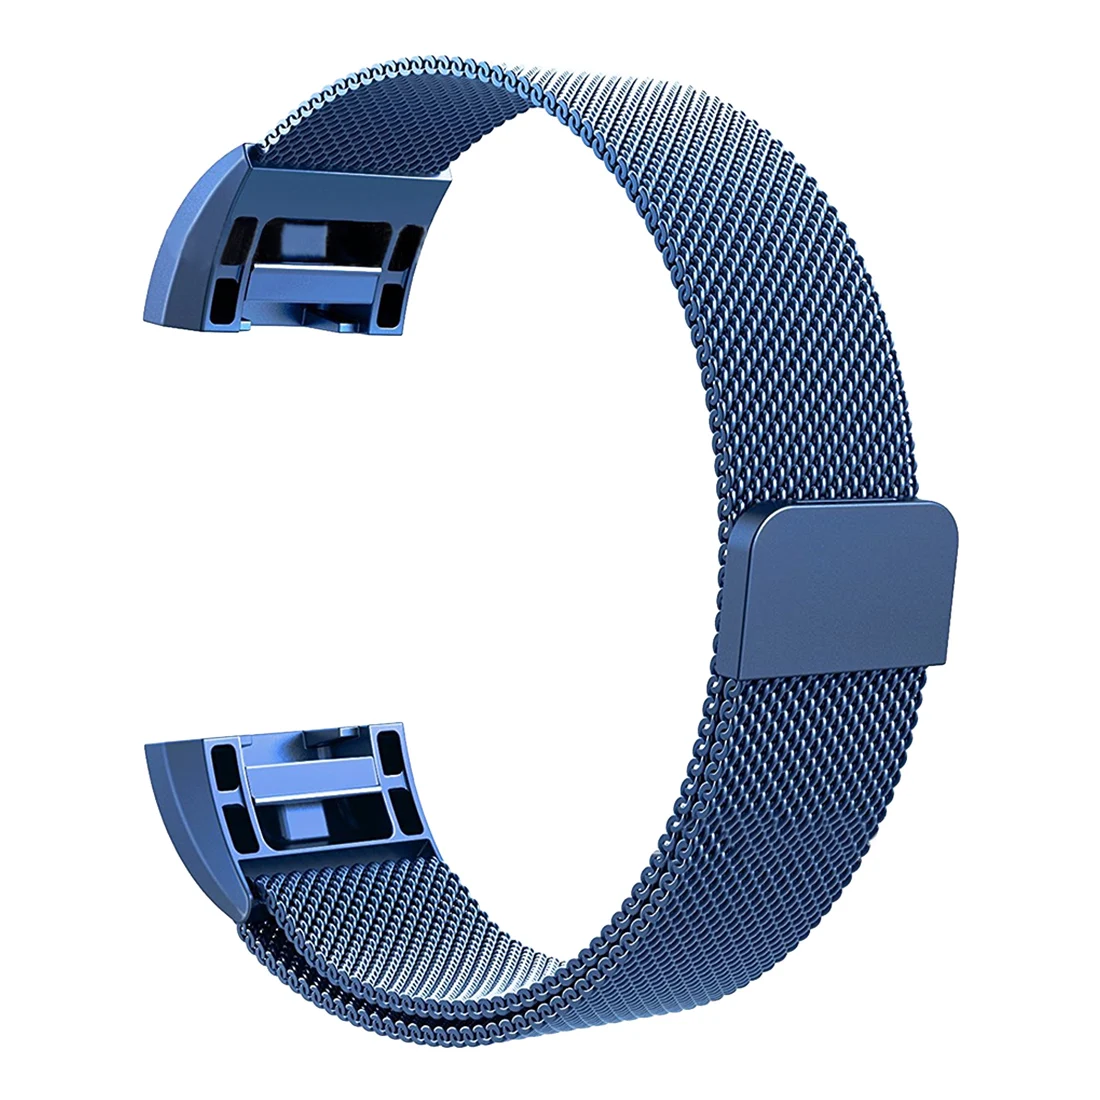 Сменный ремешок для Fitbit Charge 2 Hr, браслет из нержавеющей стали для Fit Bit Charge2, умные часы, размеры S, L - Цвет: blue